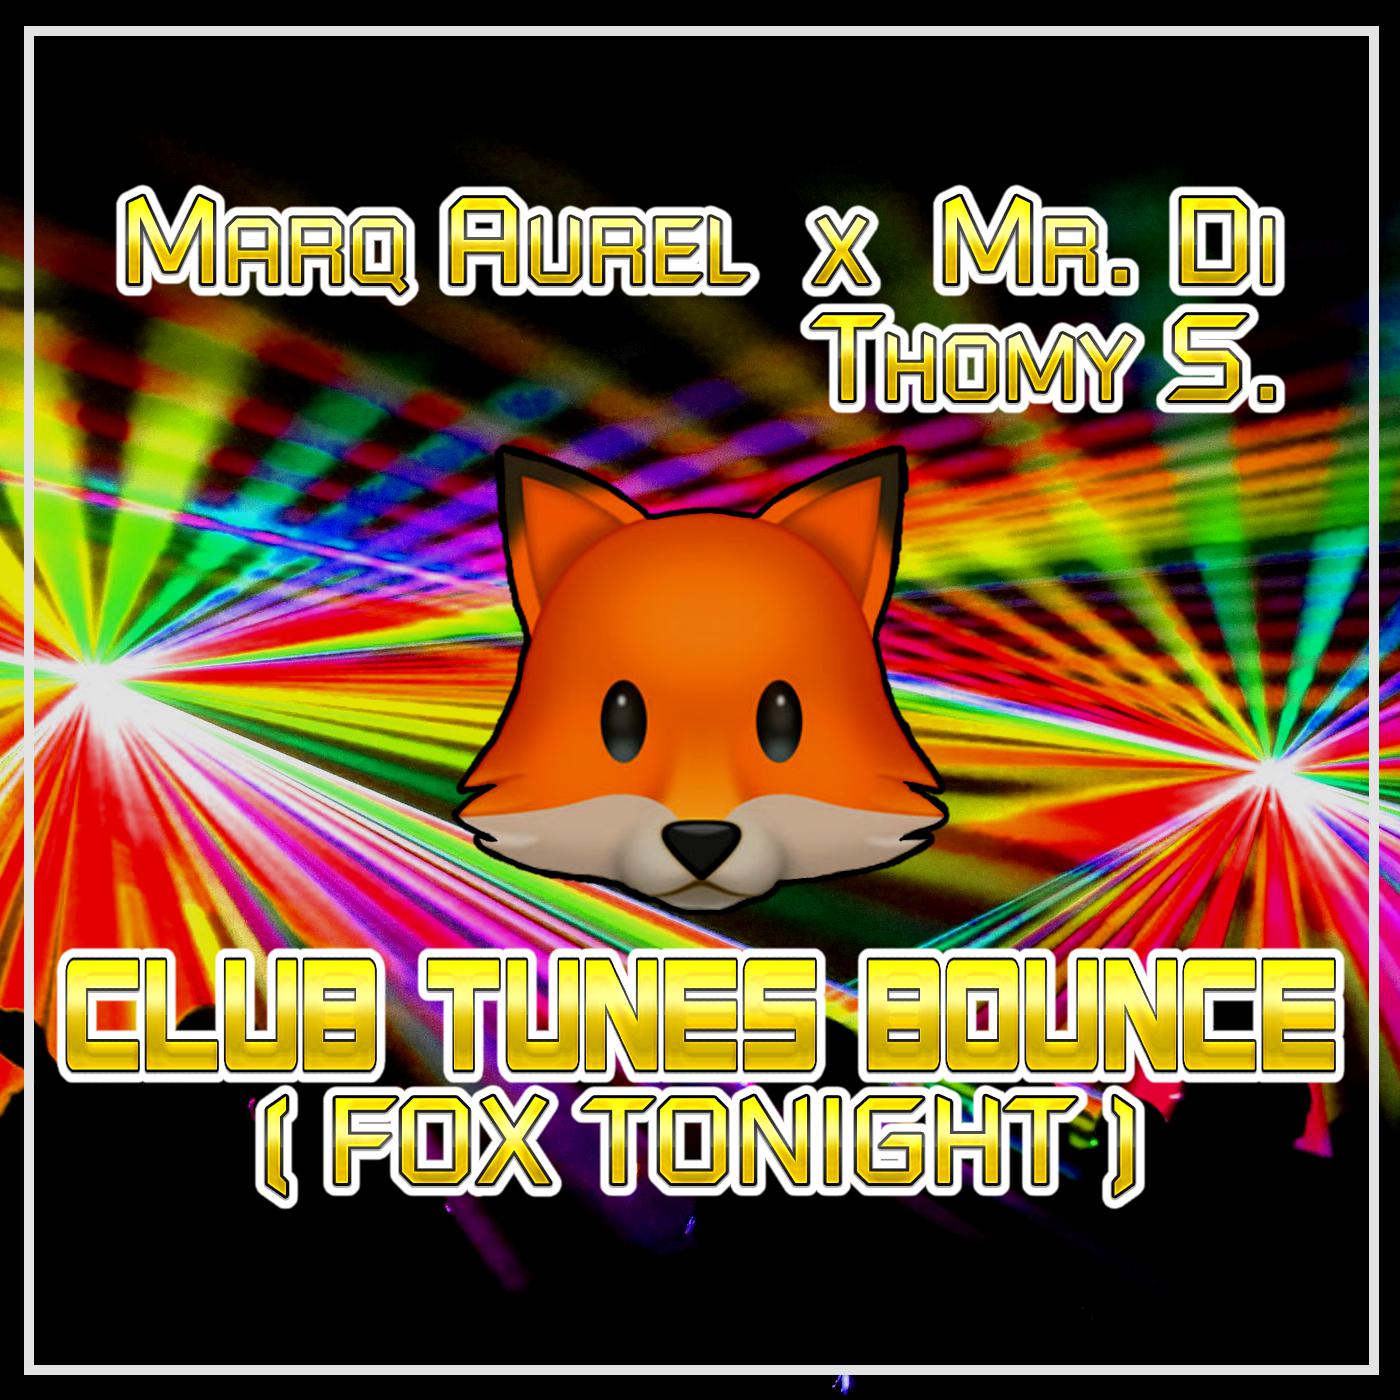 Marq Aurel - Fox Tonight (Bounce Mix)